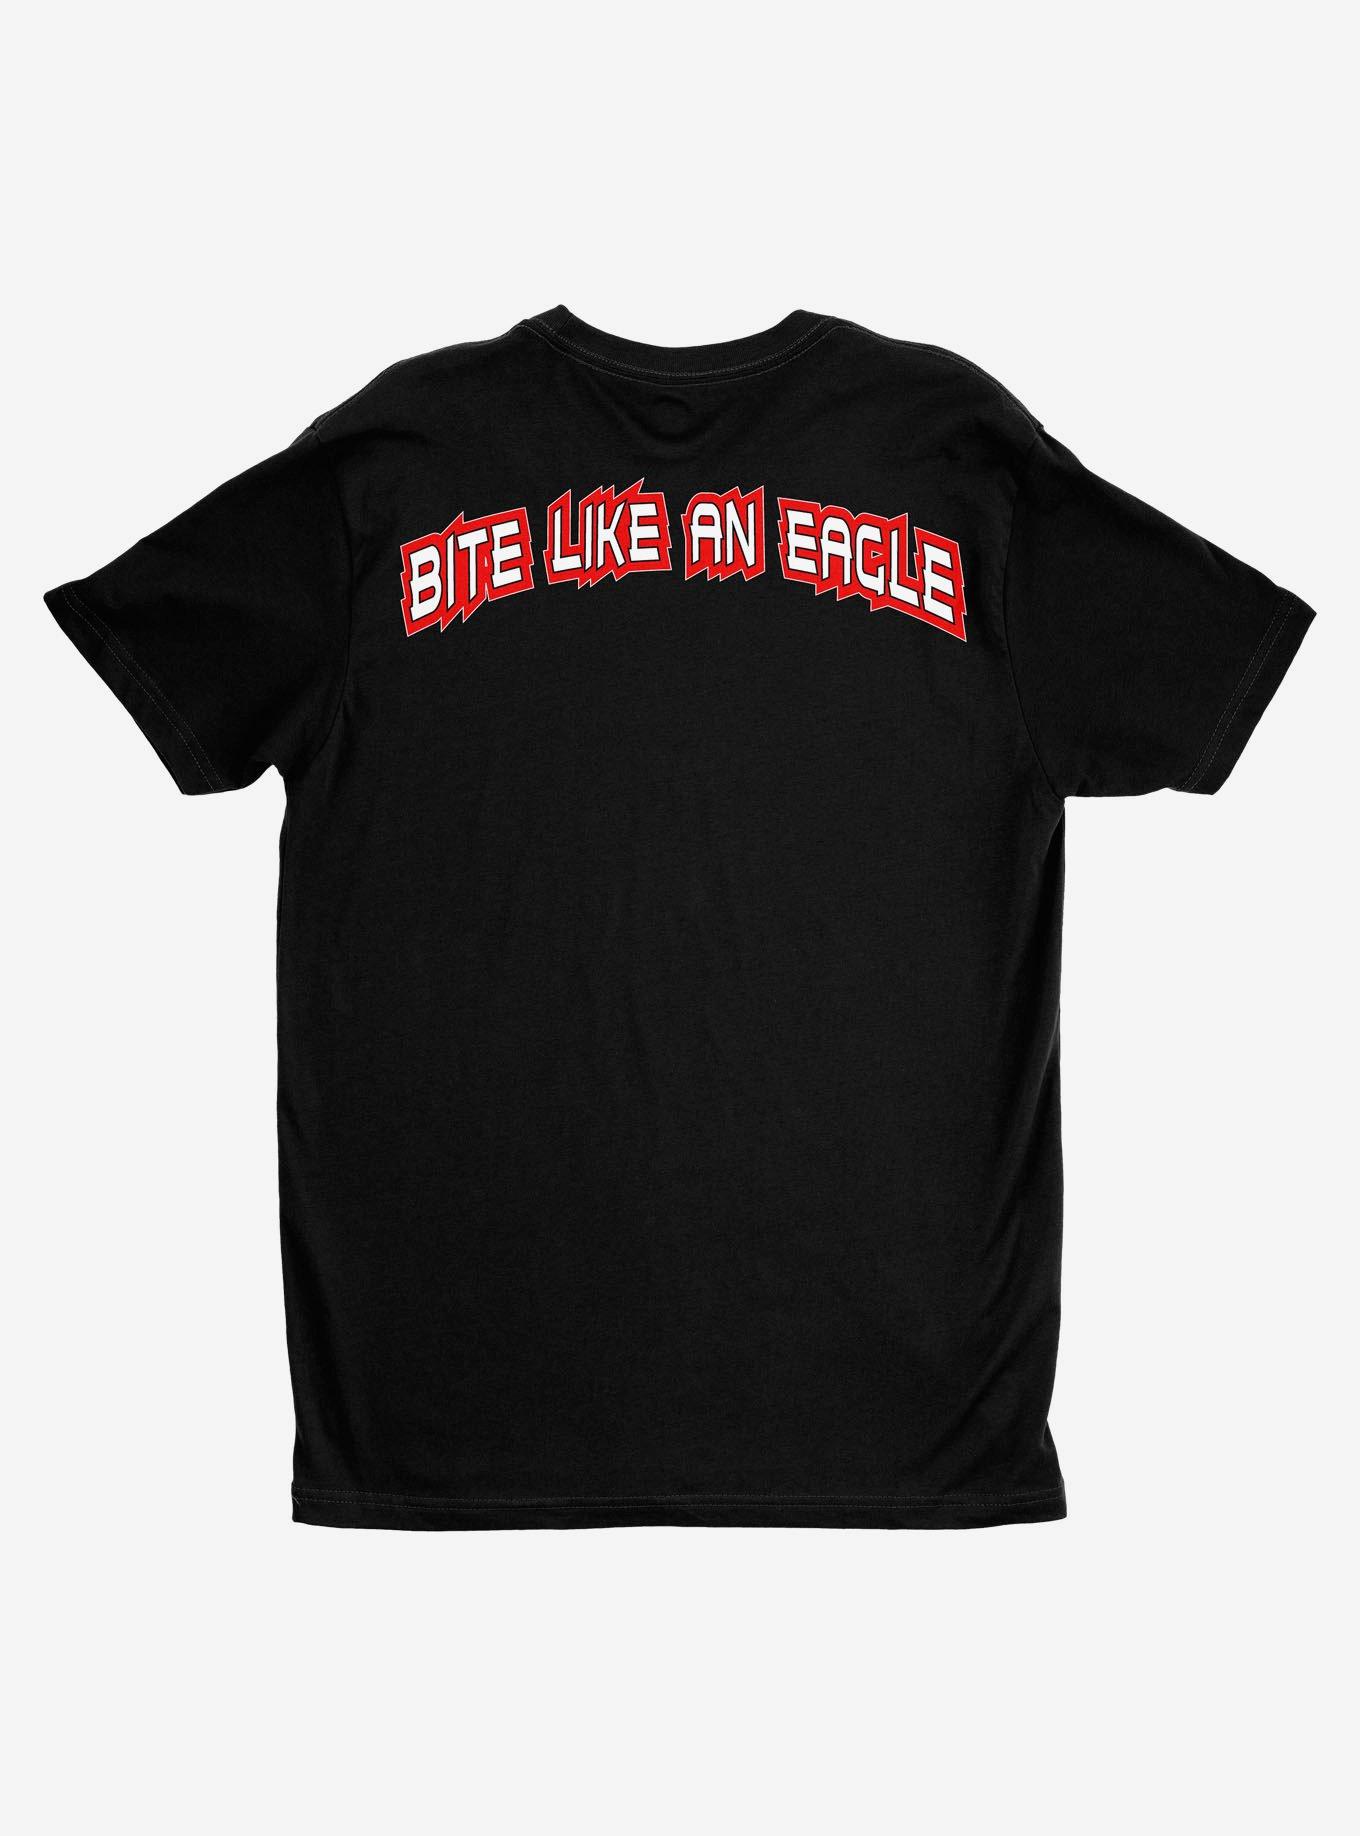 Cobra Kai Eagle Fang Karate Black T-Shirt Hot Topic Exclusive, BLACK, alternate